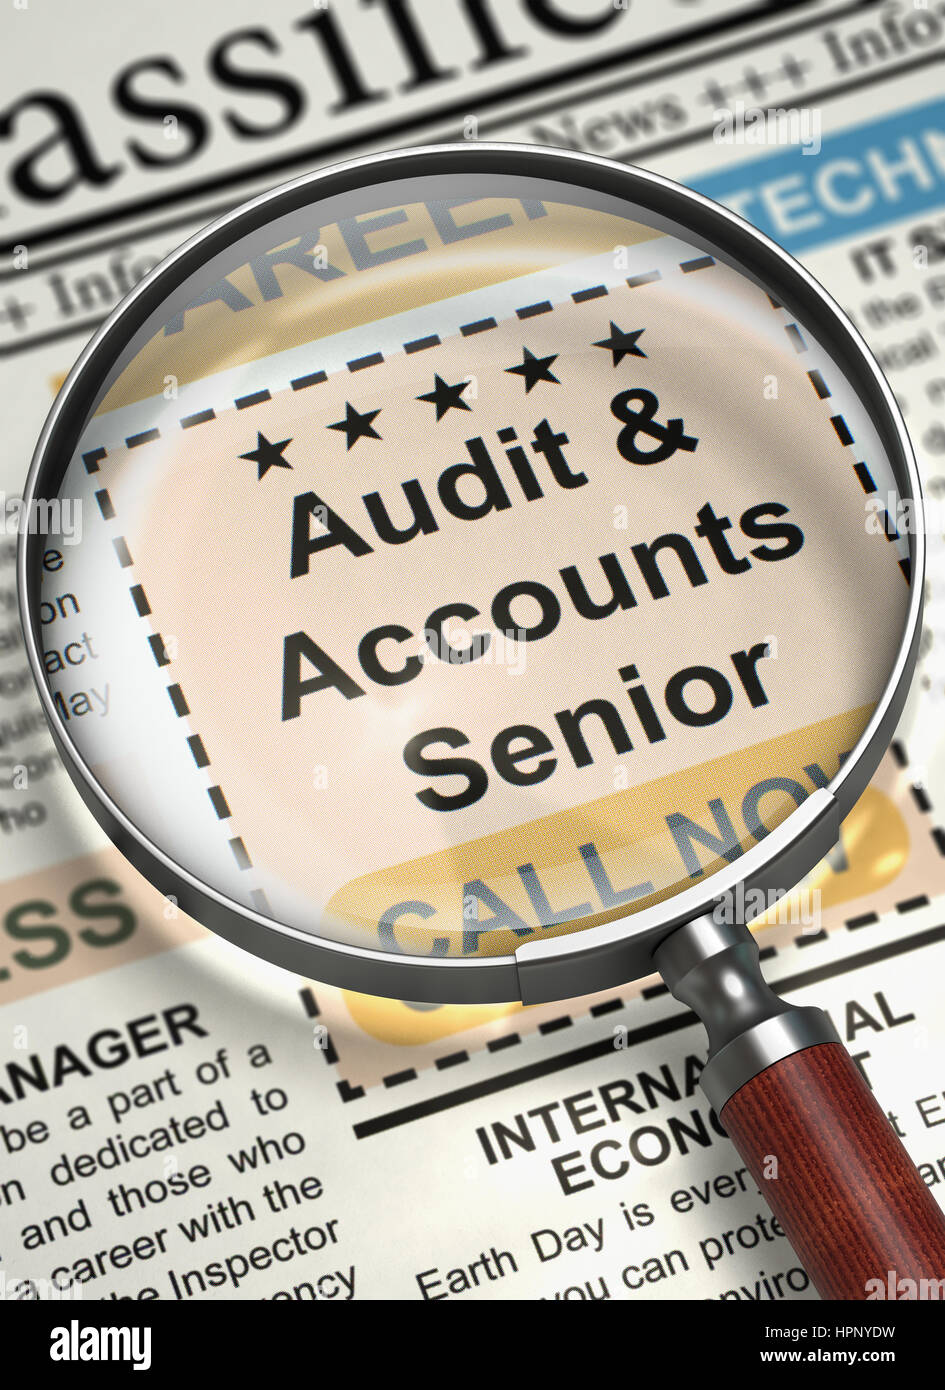 Audit And Accounts Senior Job Vacancy. 3D. Stock Photo